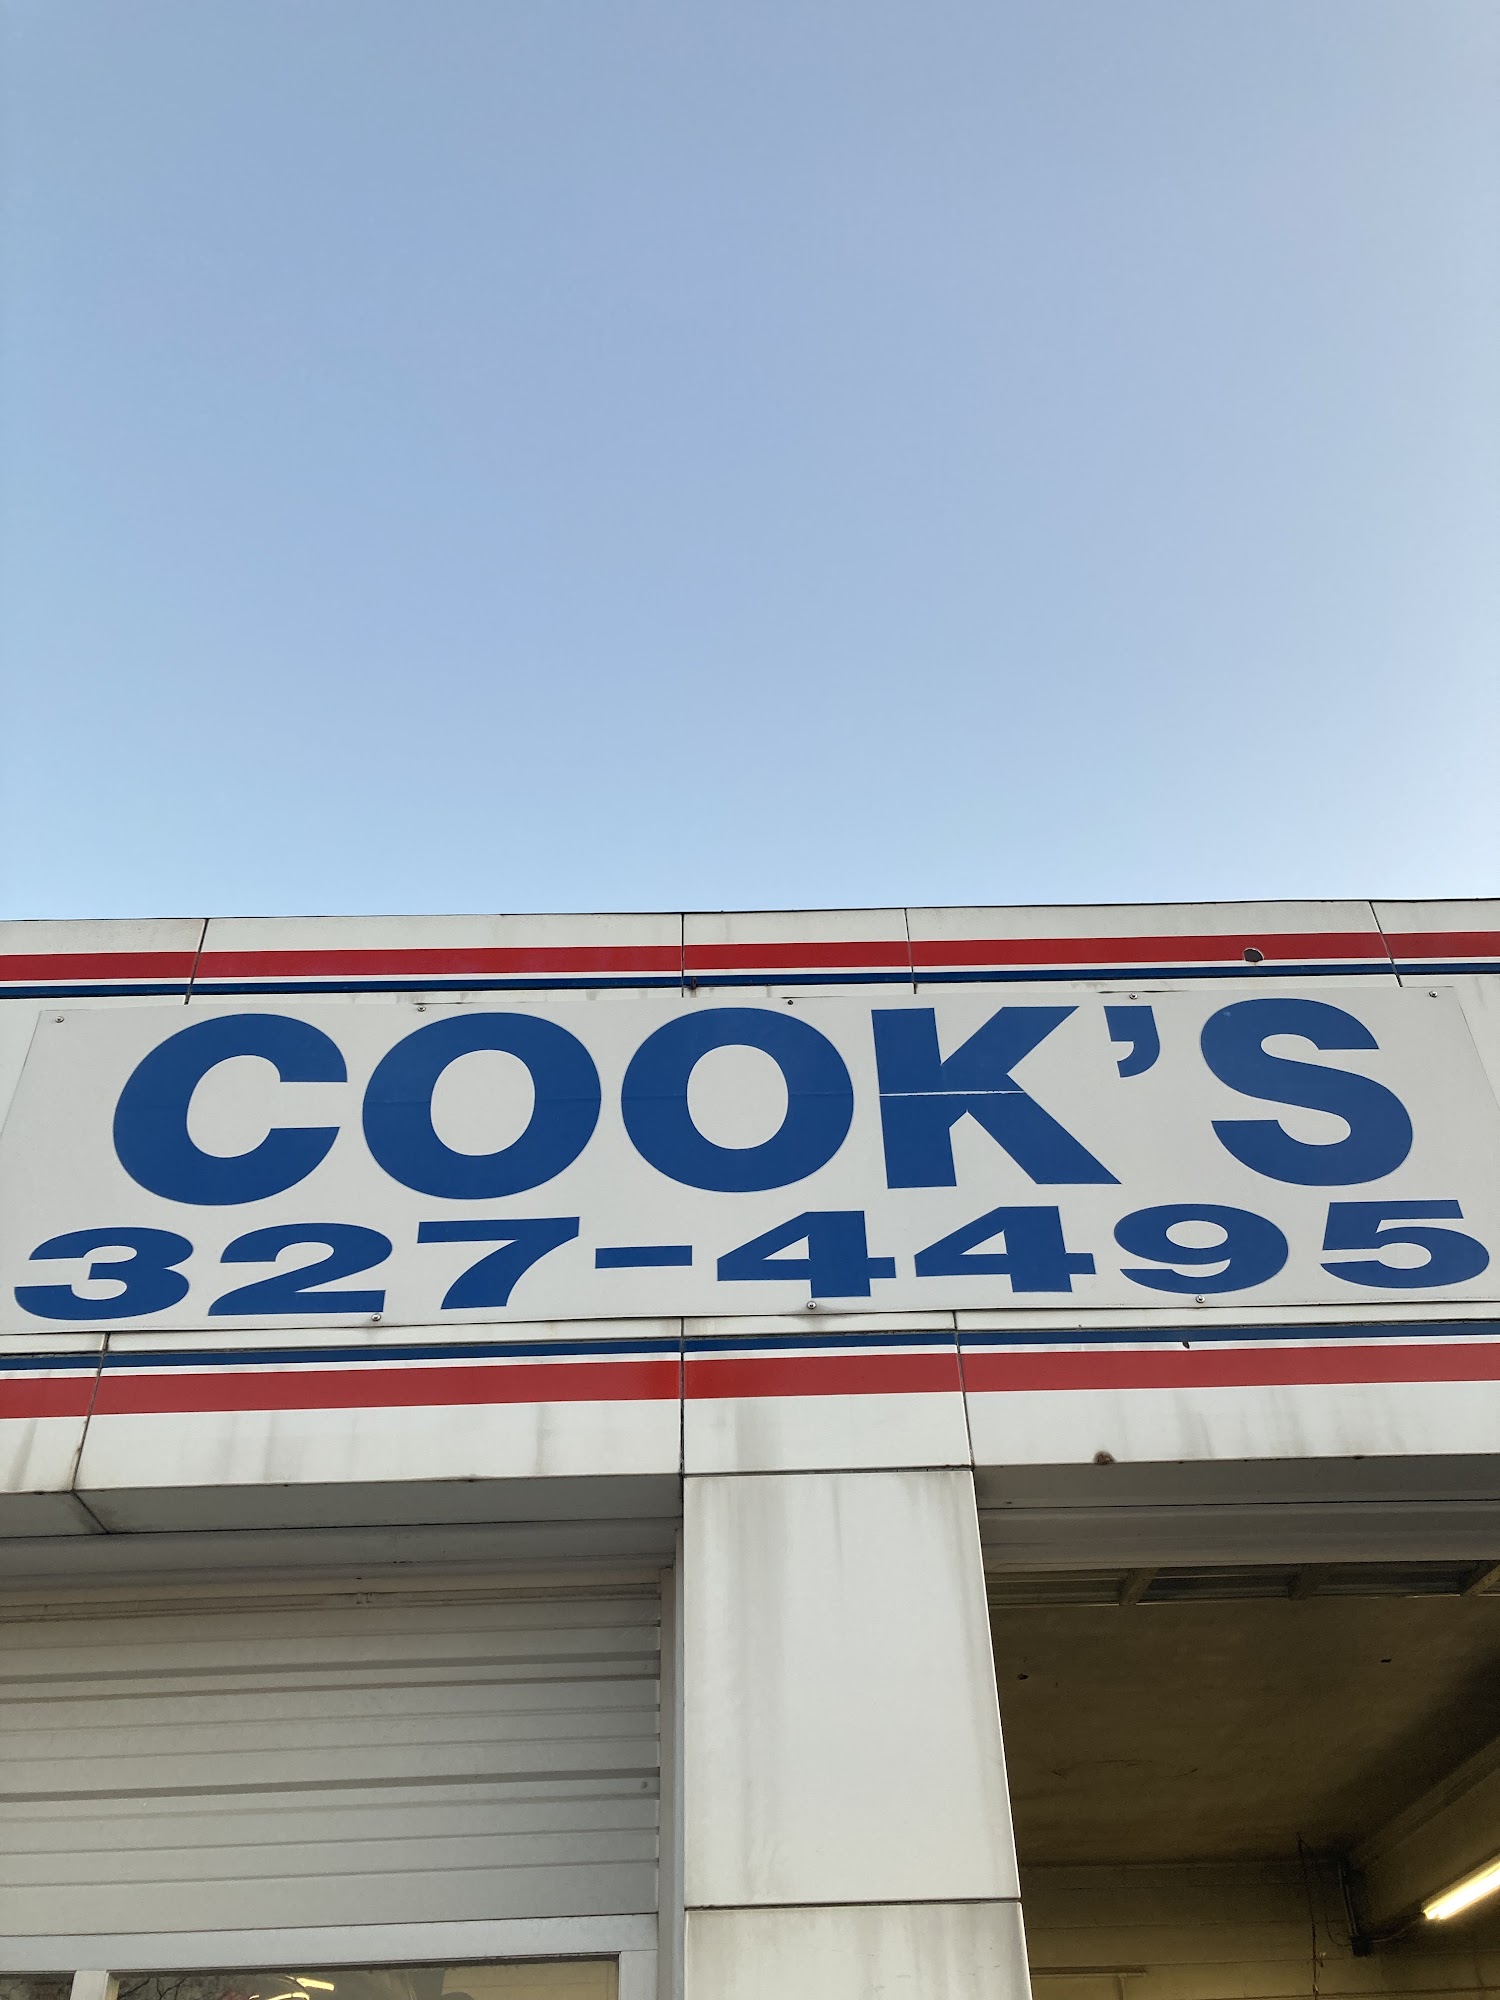 Cook's Automotive & Wrecker